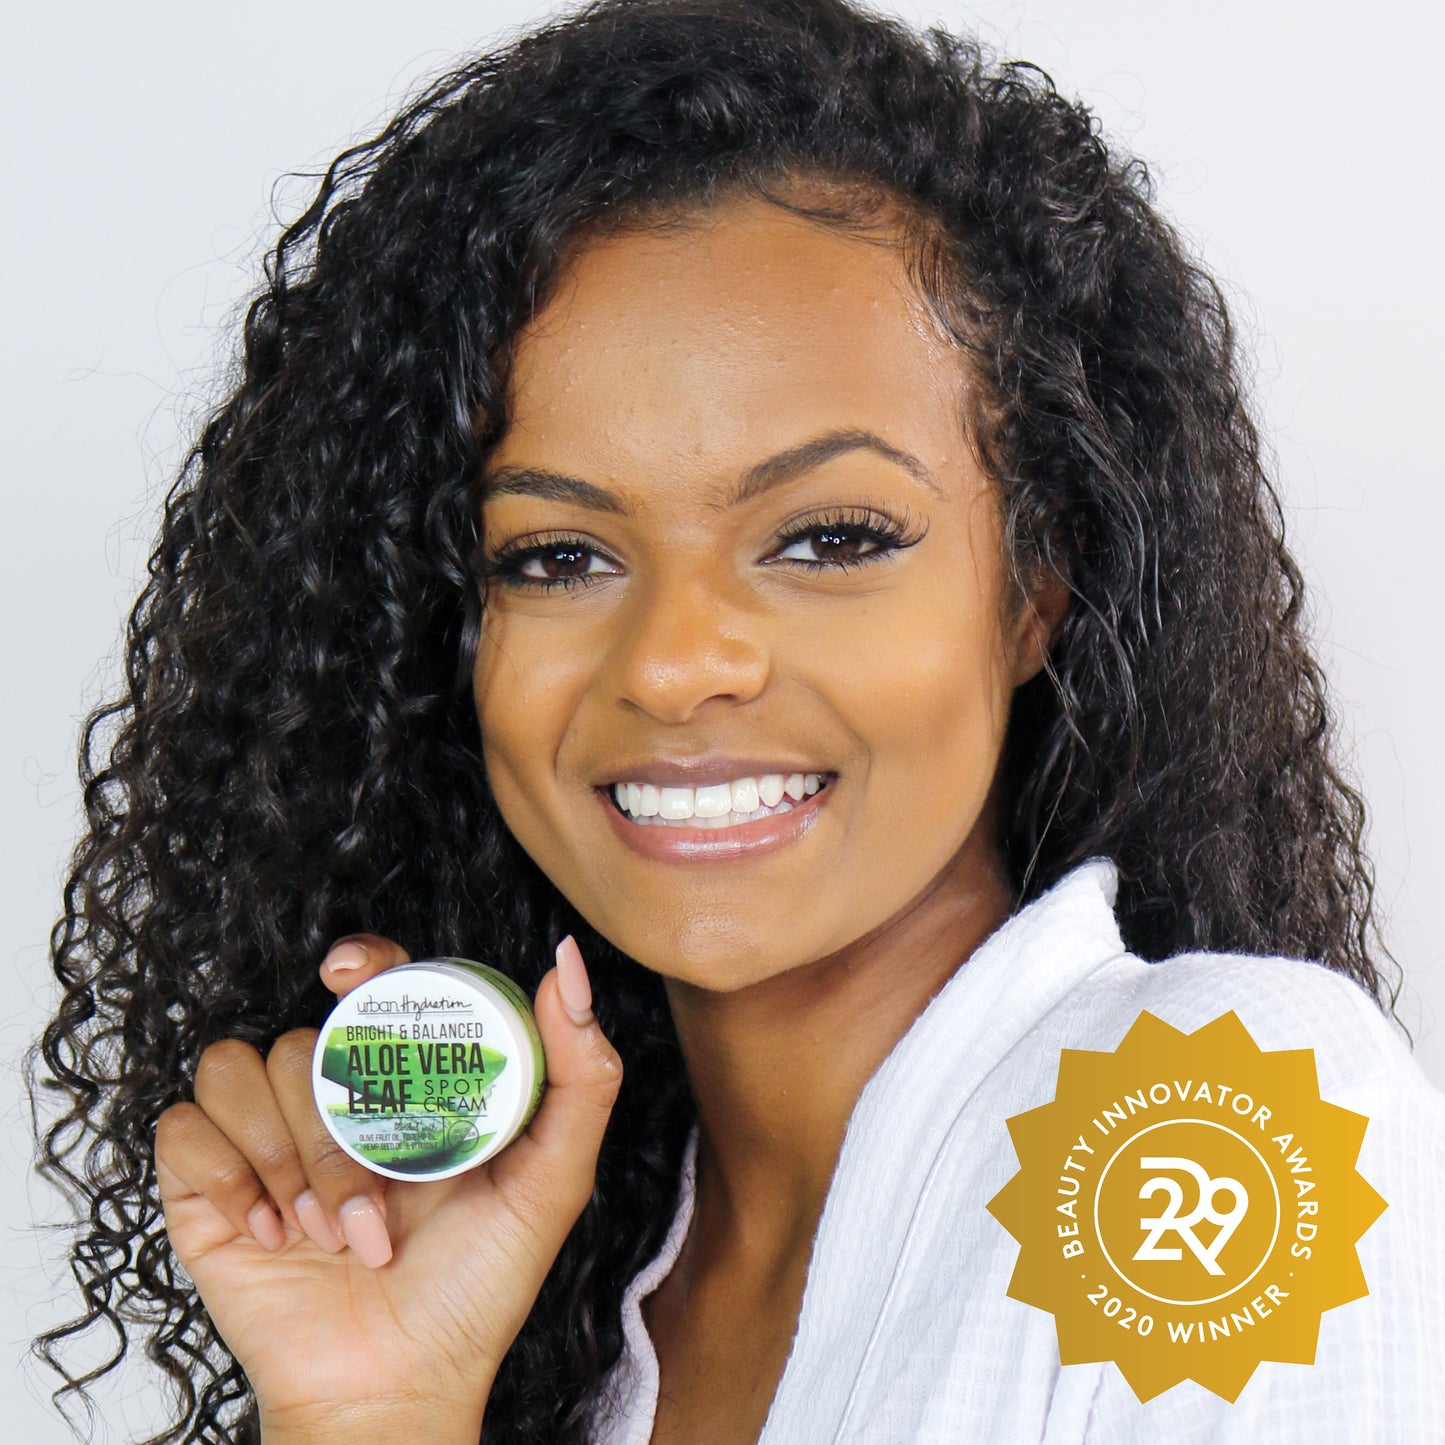 Refinery29’s 2020 Beauty Innovator Awards - Urban Hydration Wins "Skin Under $25"